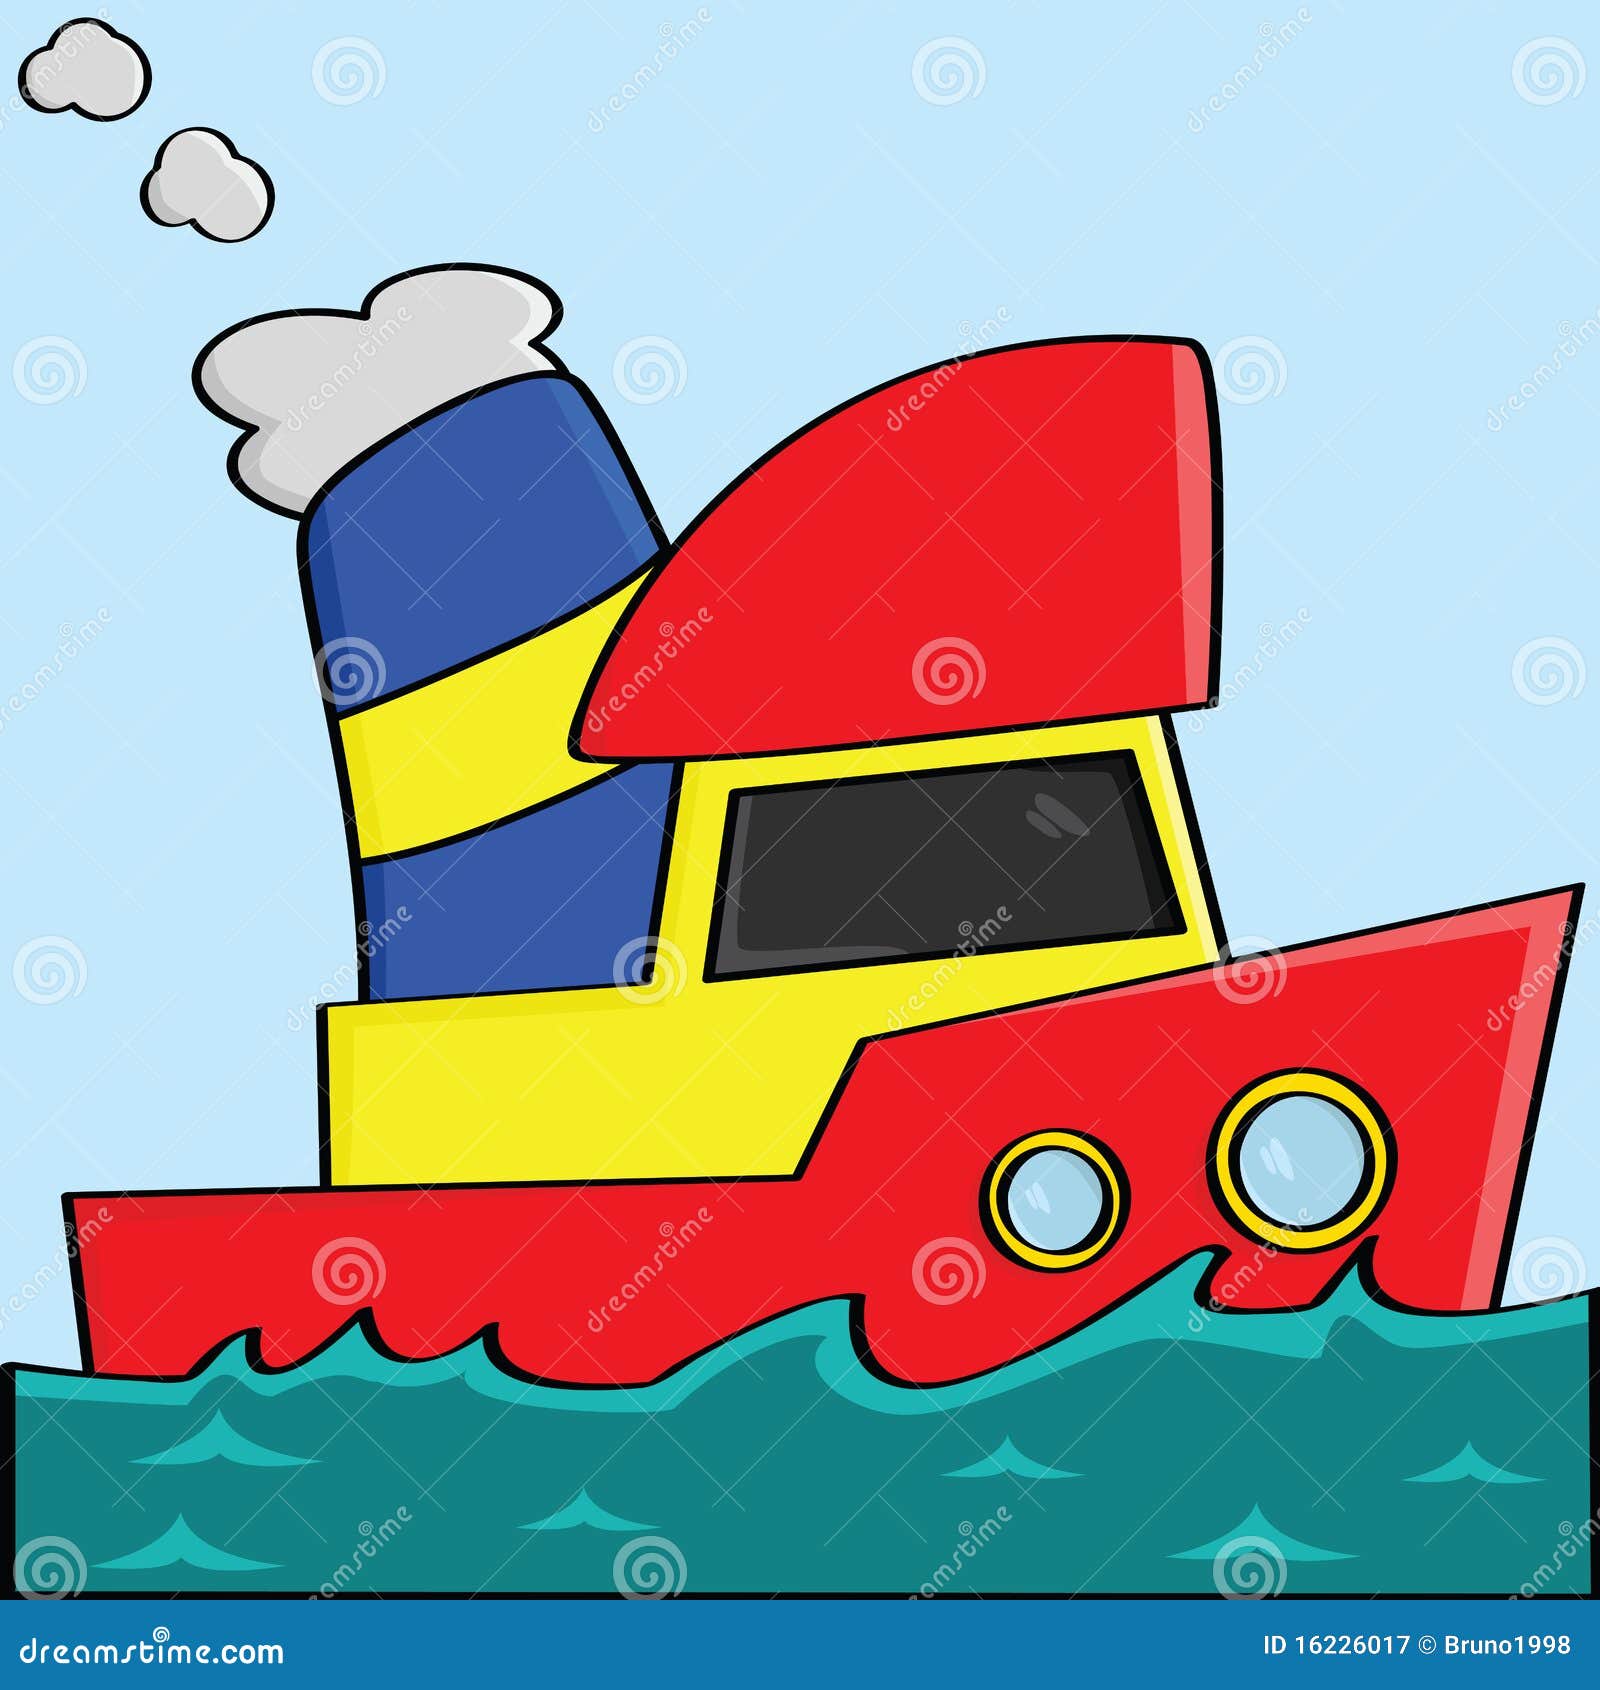 Cartoon Boat Royalty Free Stock Photography - Image: 16226017